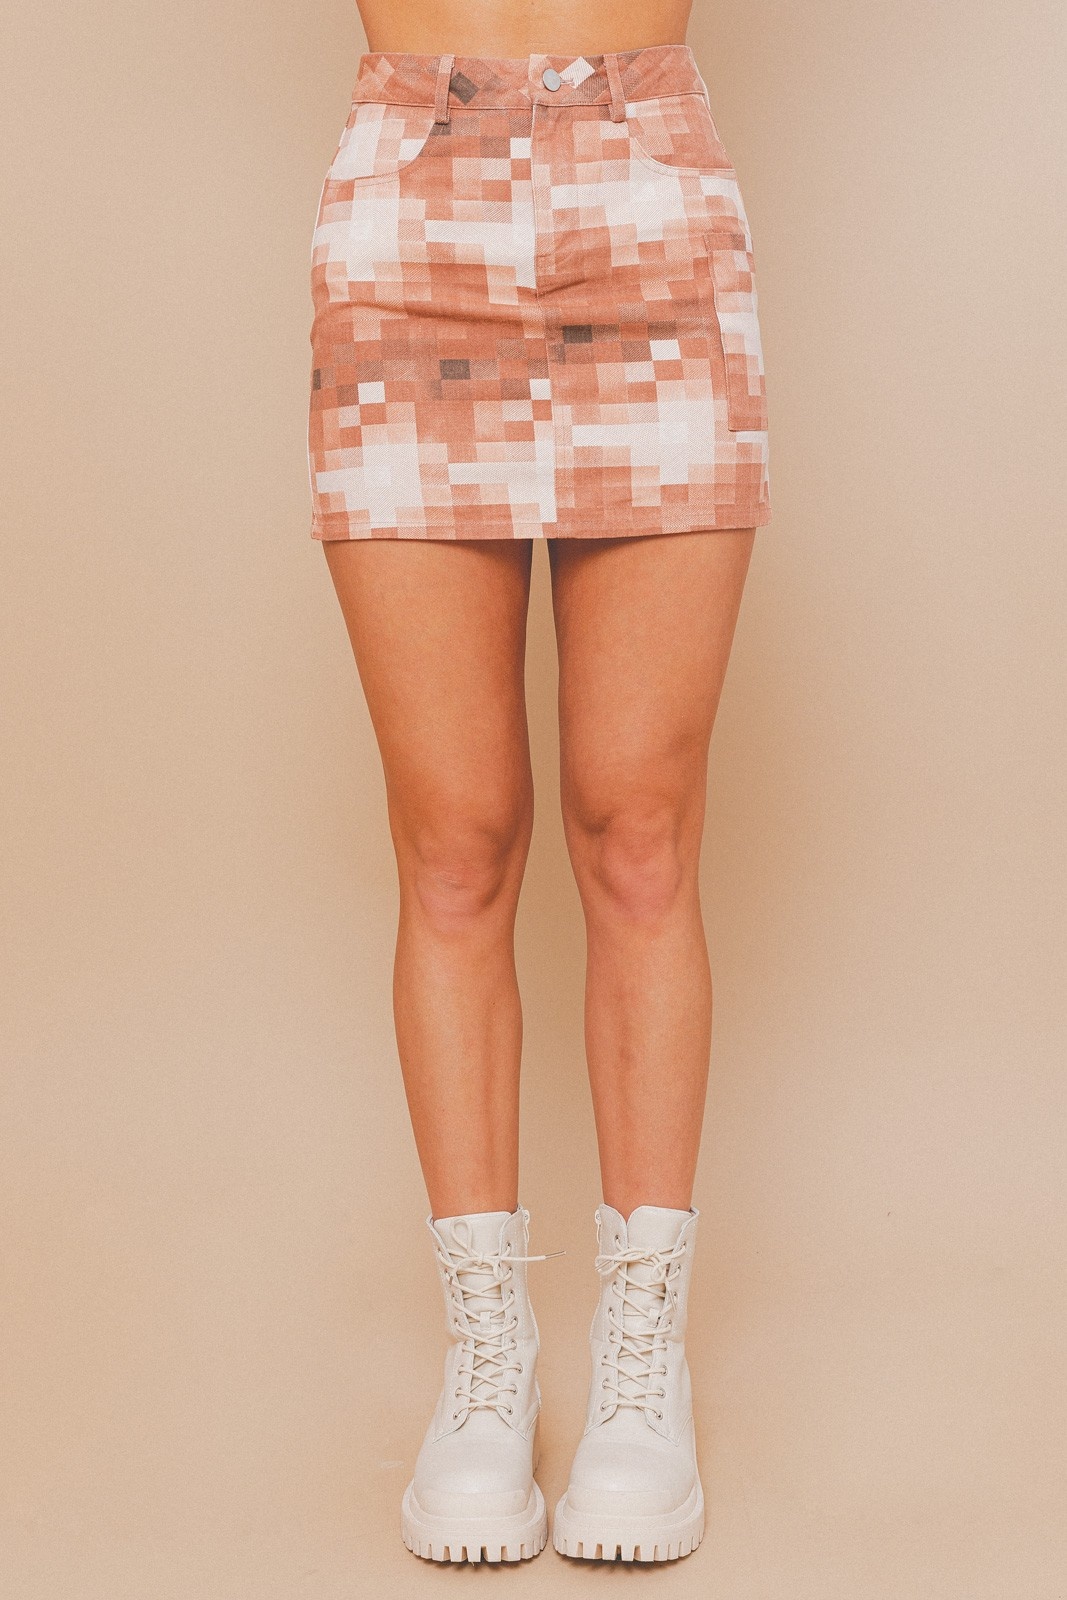 Pixel Mini Skirt